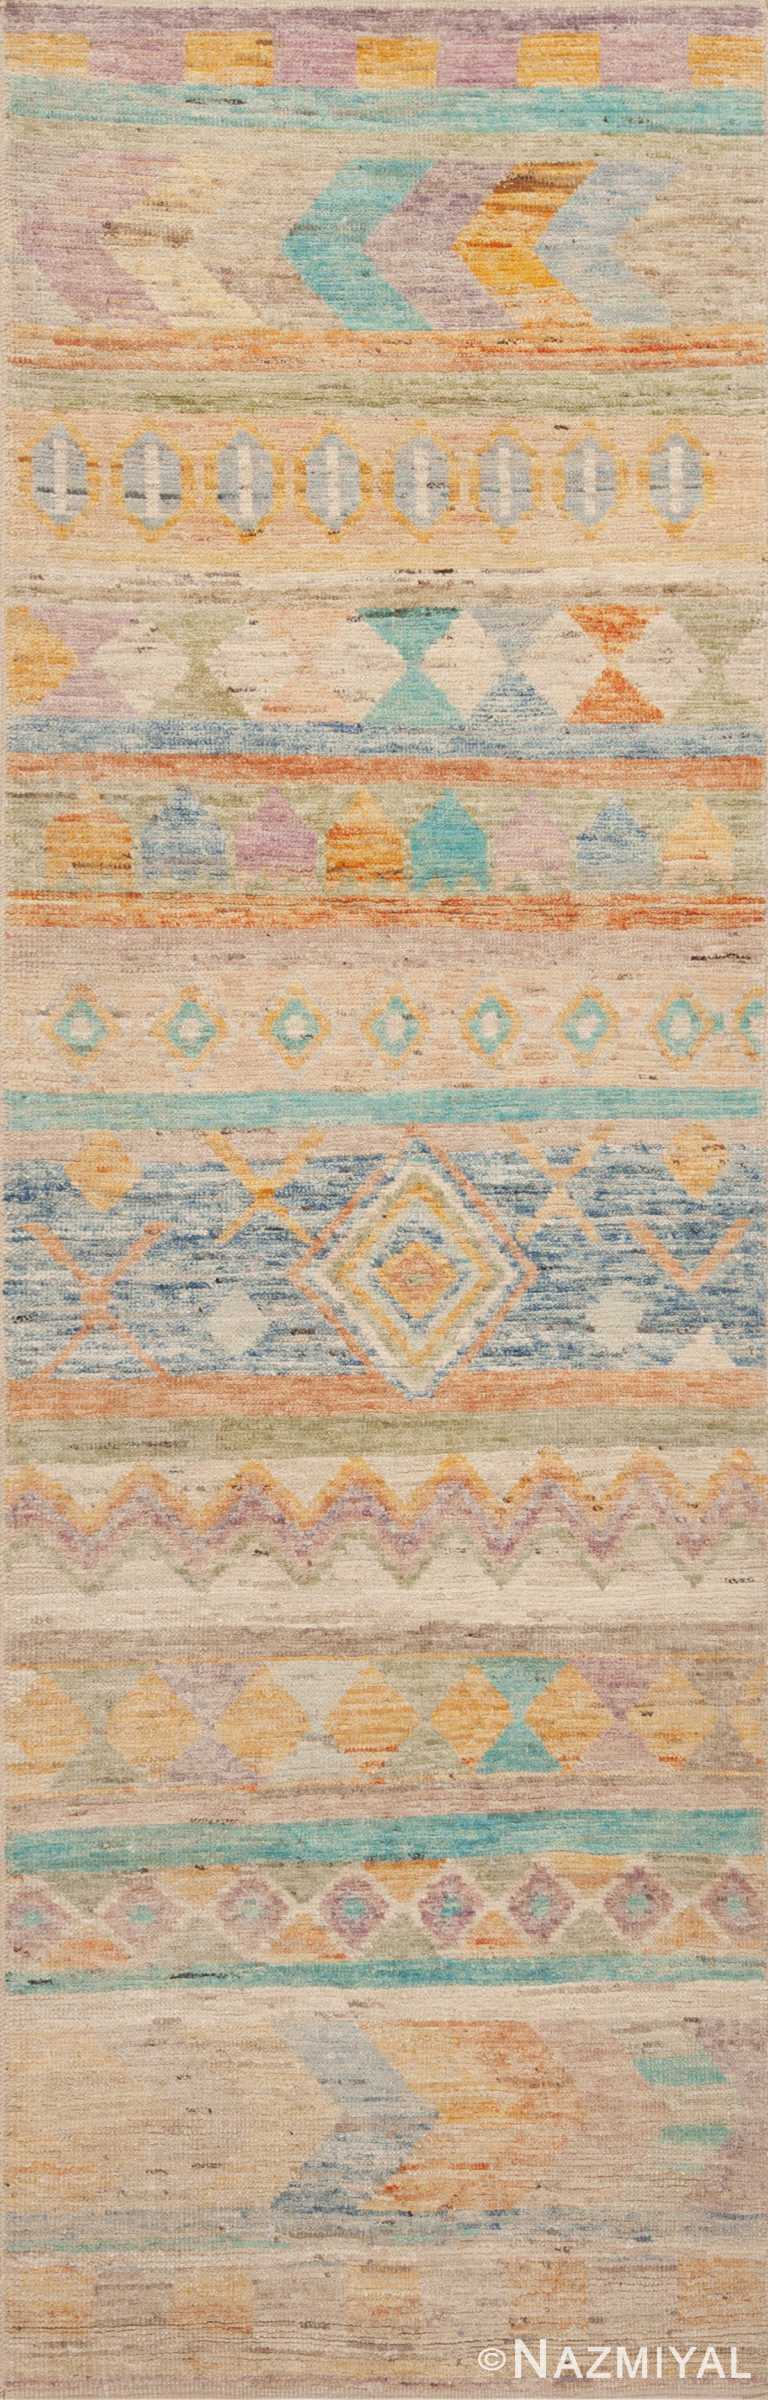 Happy Colorful Tribal Geometric Modern Hallway Runner Rug 11017 by Nazmiyal Antique Rugs